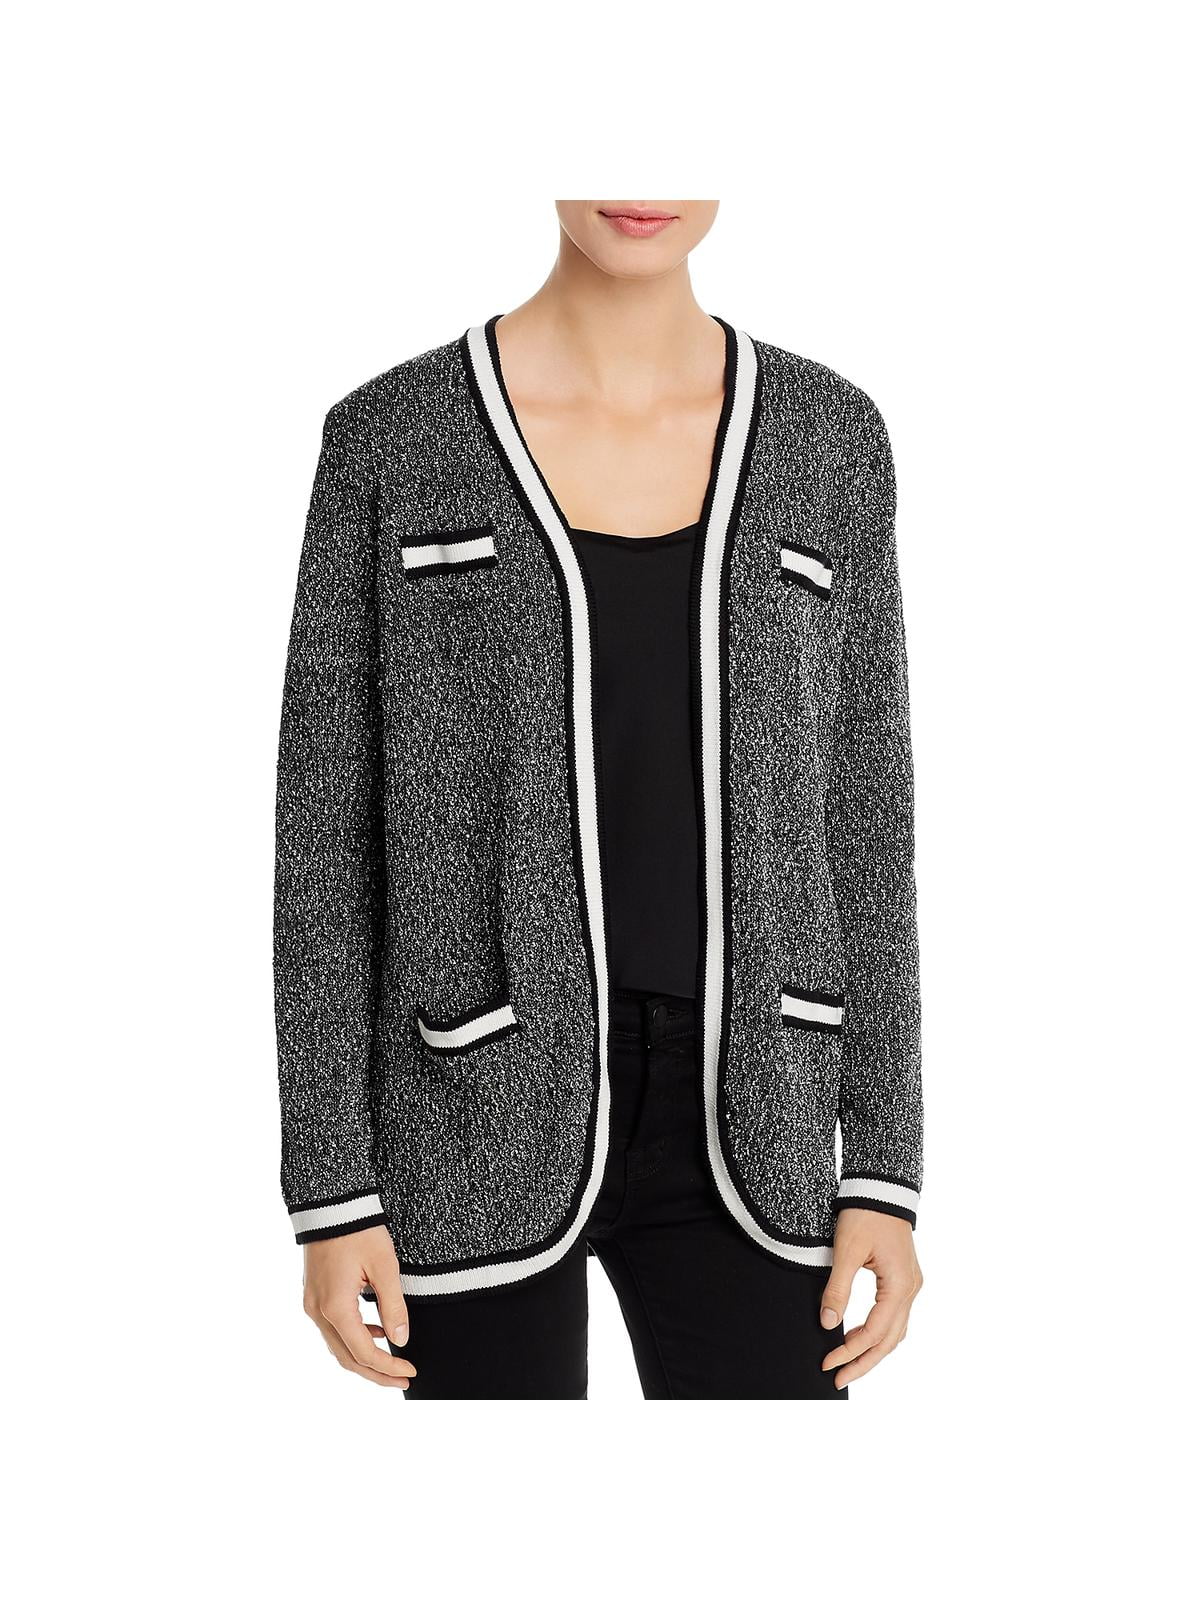 Calvin Klein Womens Tweed Jacket Cardigan Sweater Black S 